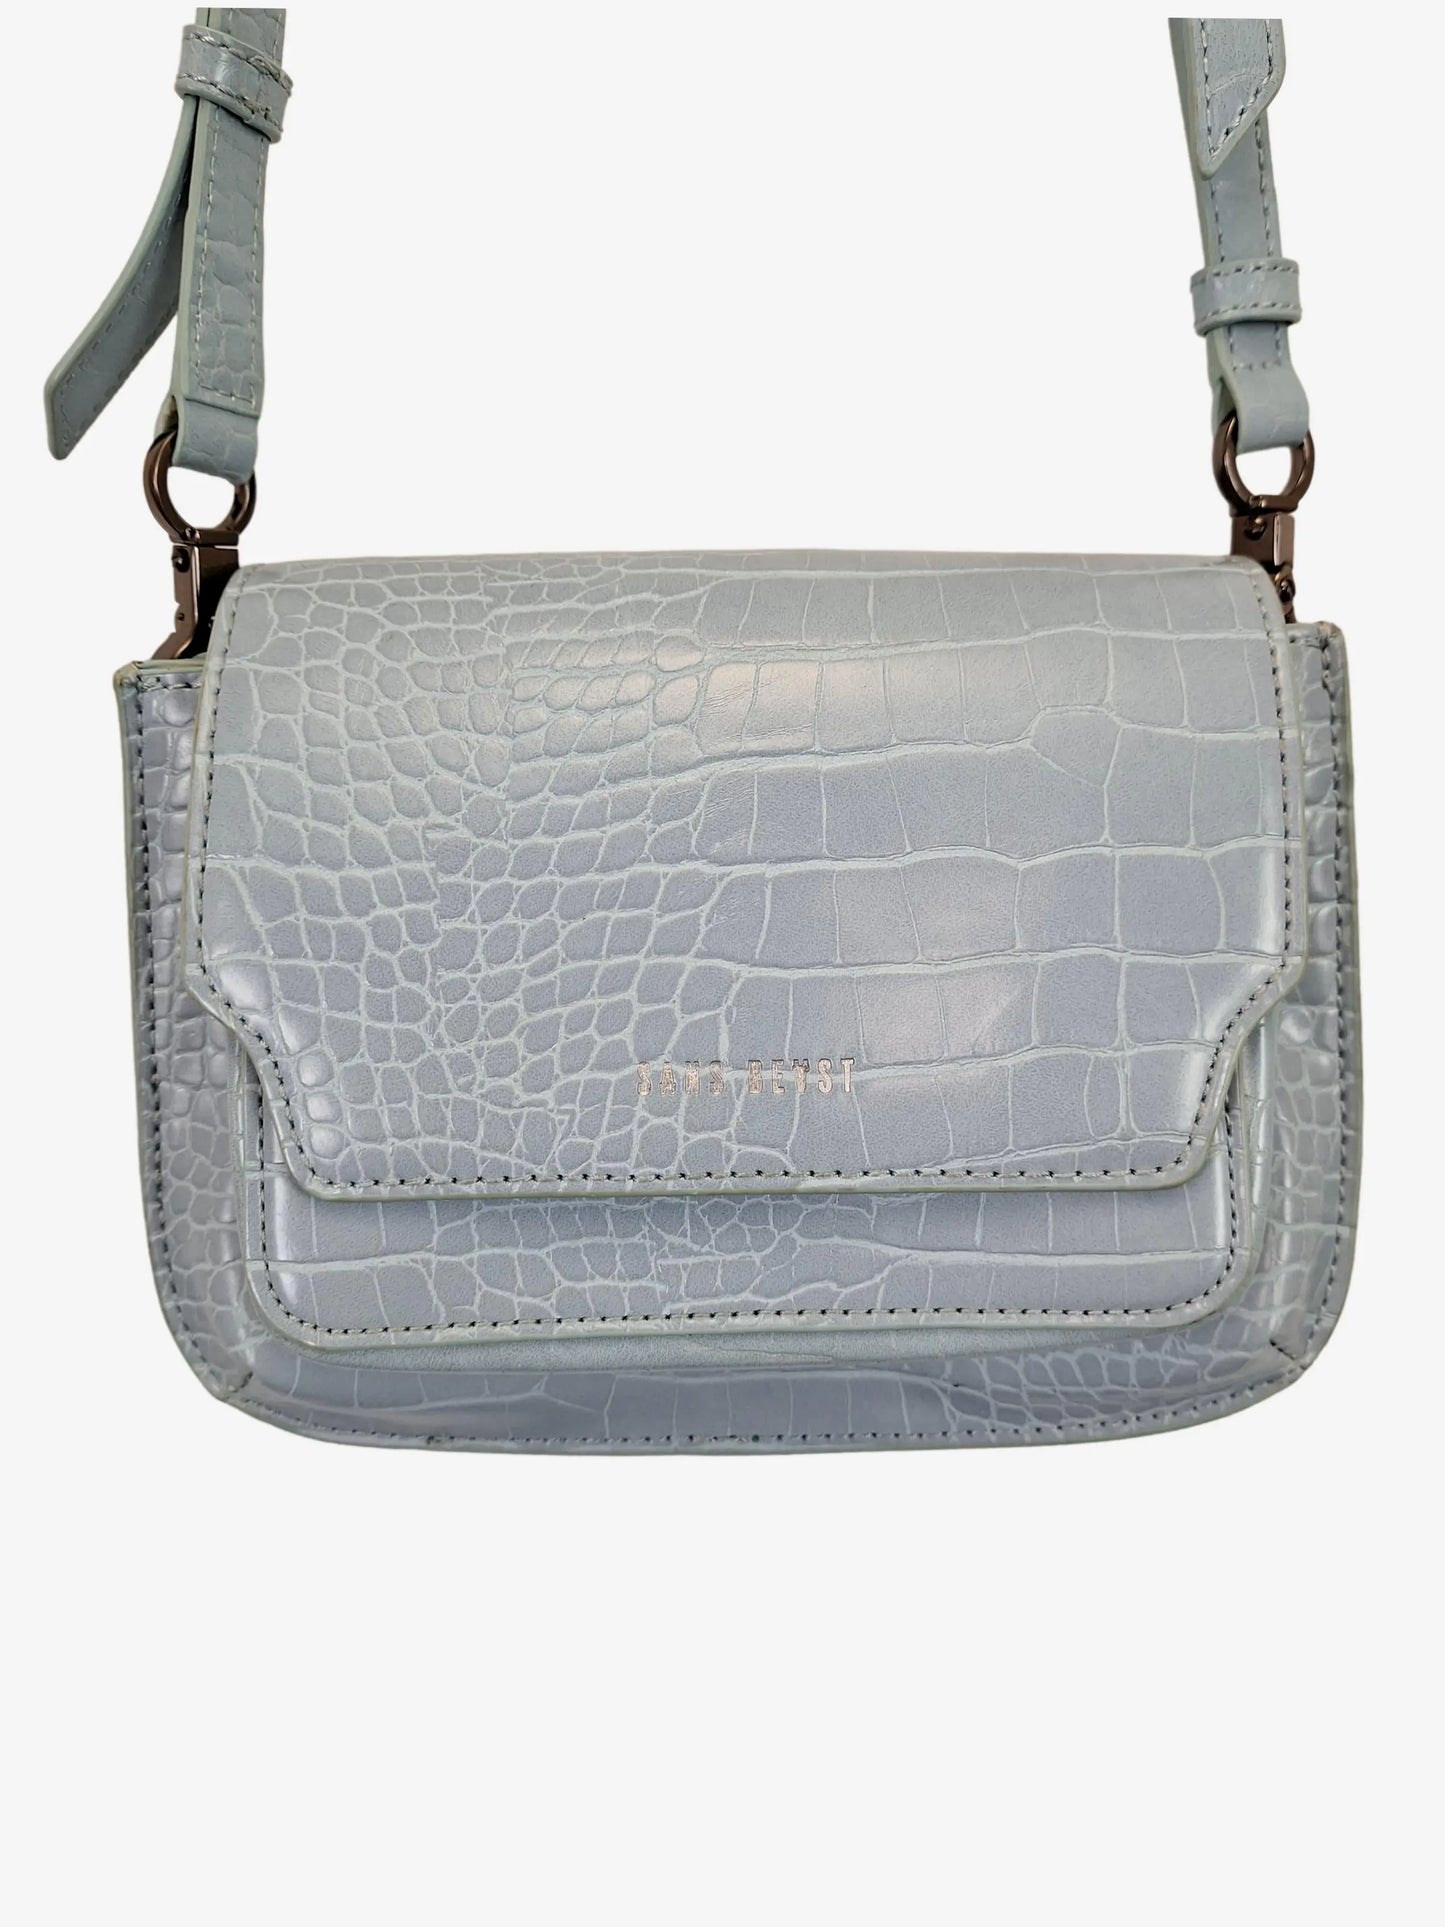 Sans Beast Reader Croc Crossbody Satchel  Bag Size OSFA by SwapUp-Online Second Hand Store-Online Thrift Store